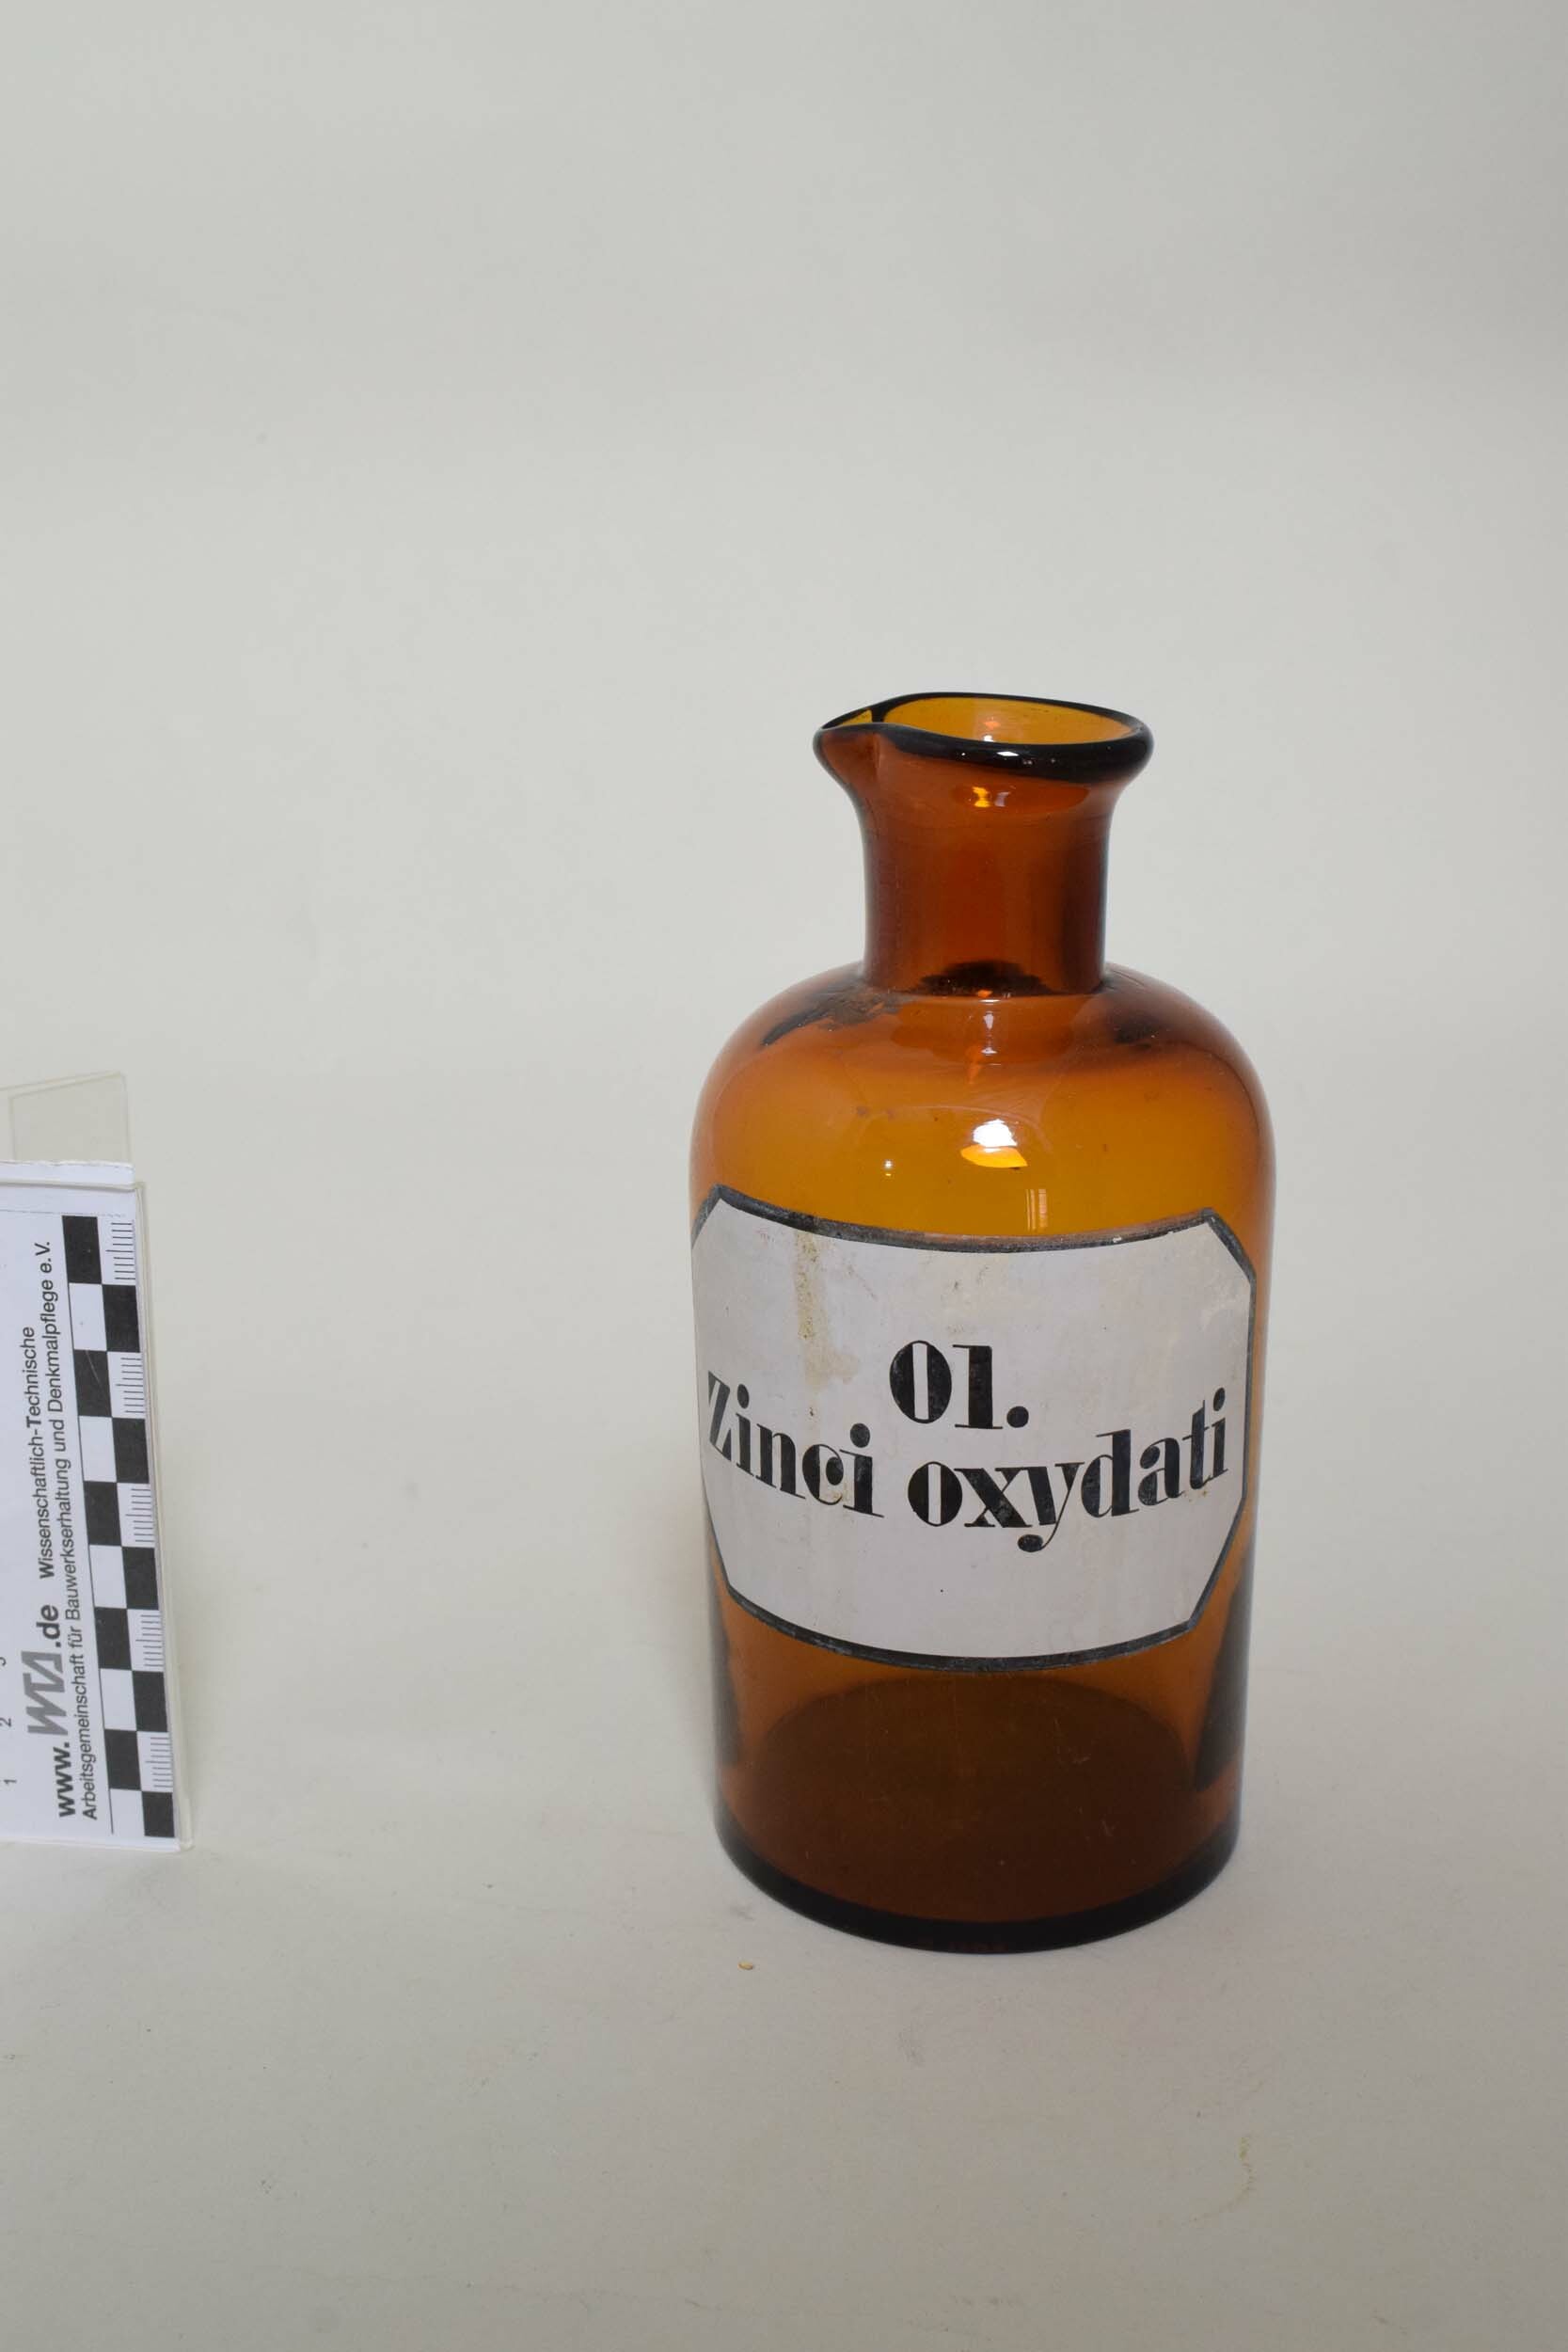 Apothekenflasche "Ol. Zinci oxydati" (Heimatmuseum Dohna CC BY-NC-SA)